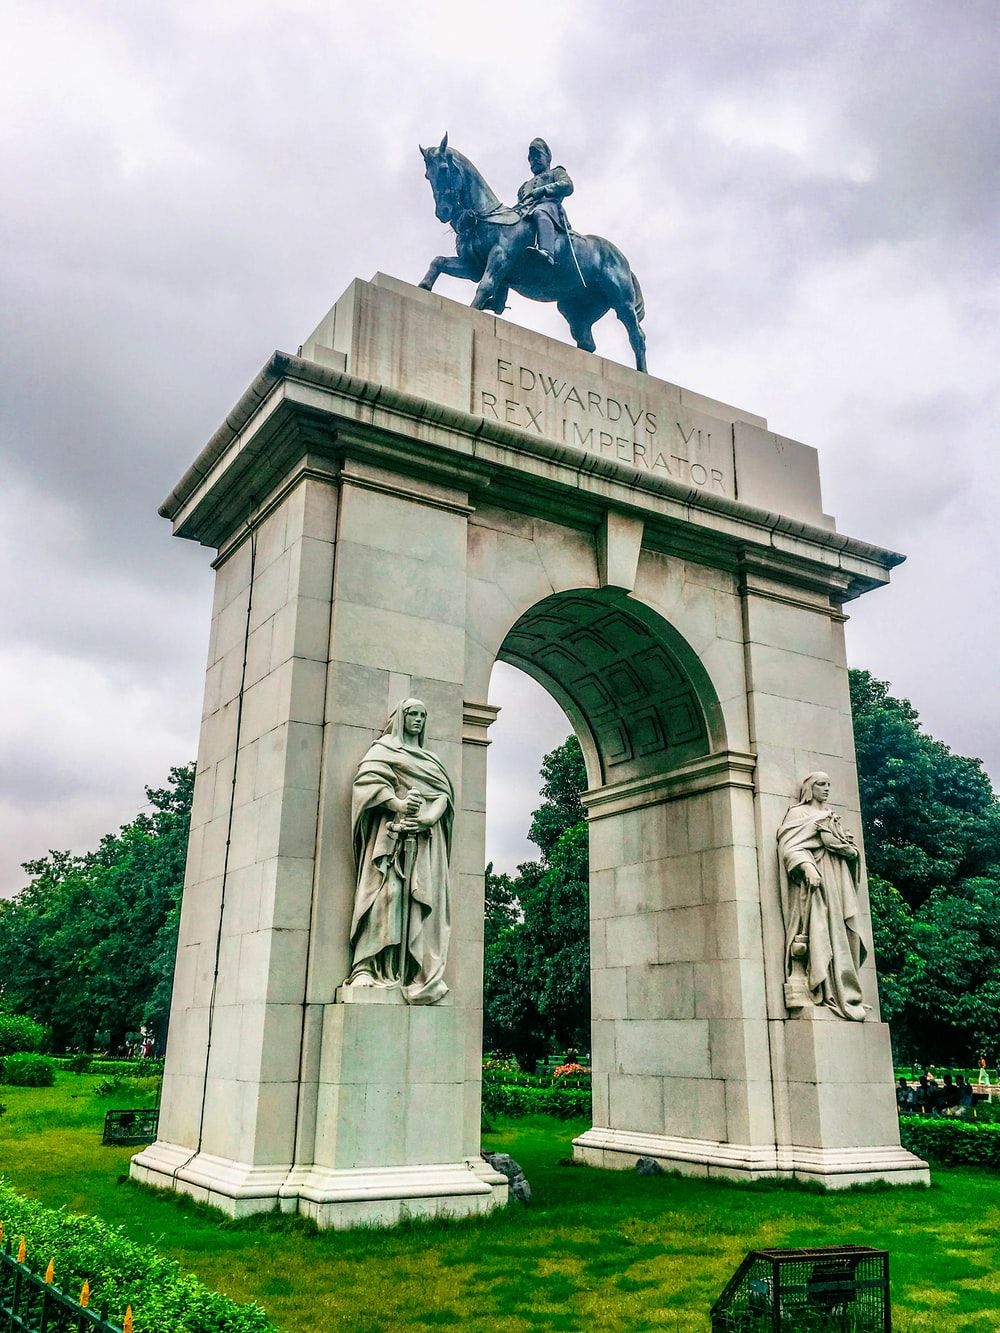 Victoria Memorial Picture. Download Free Image